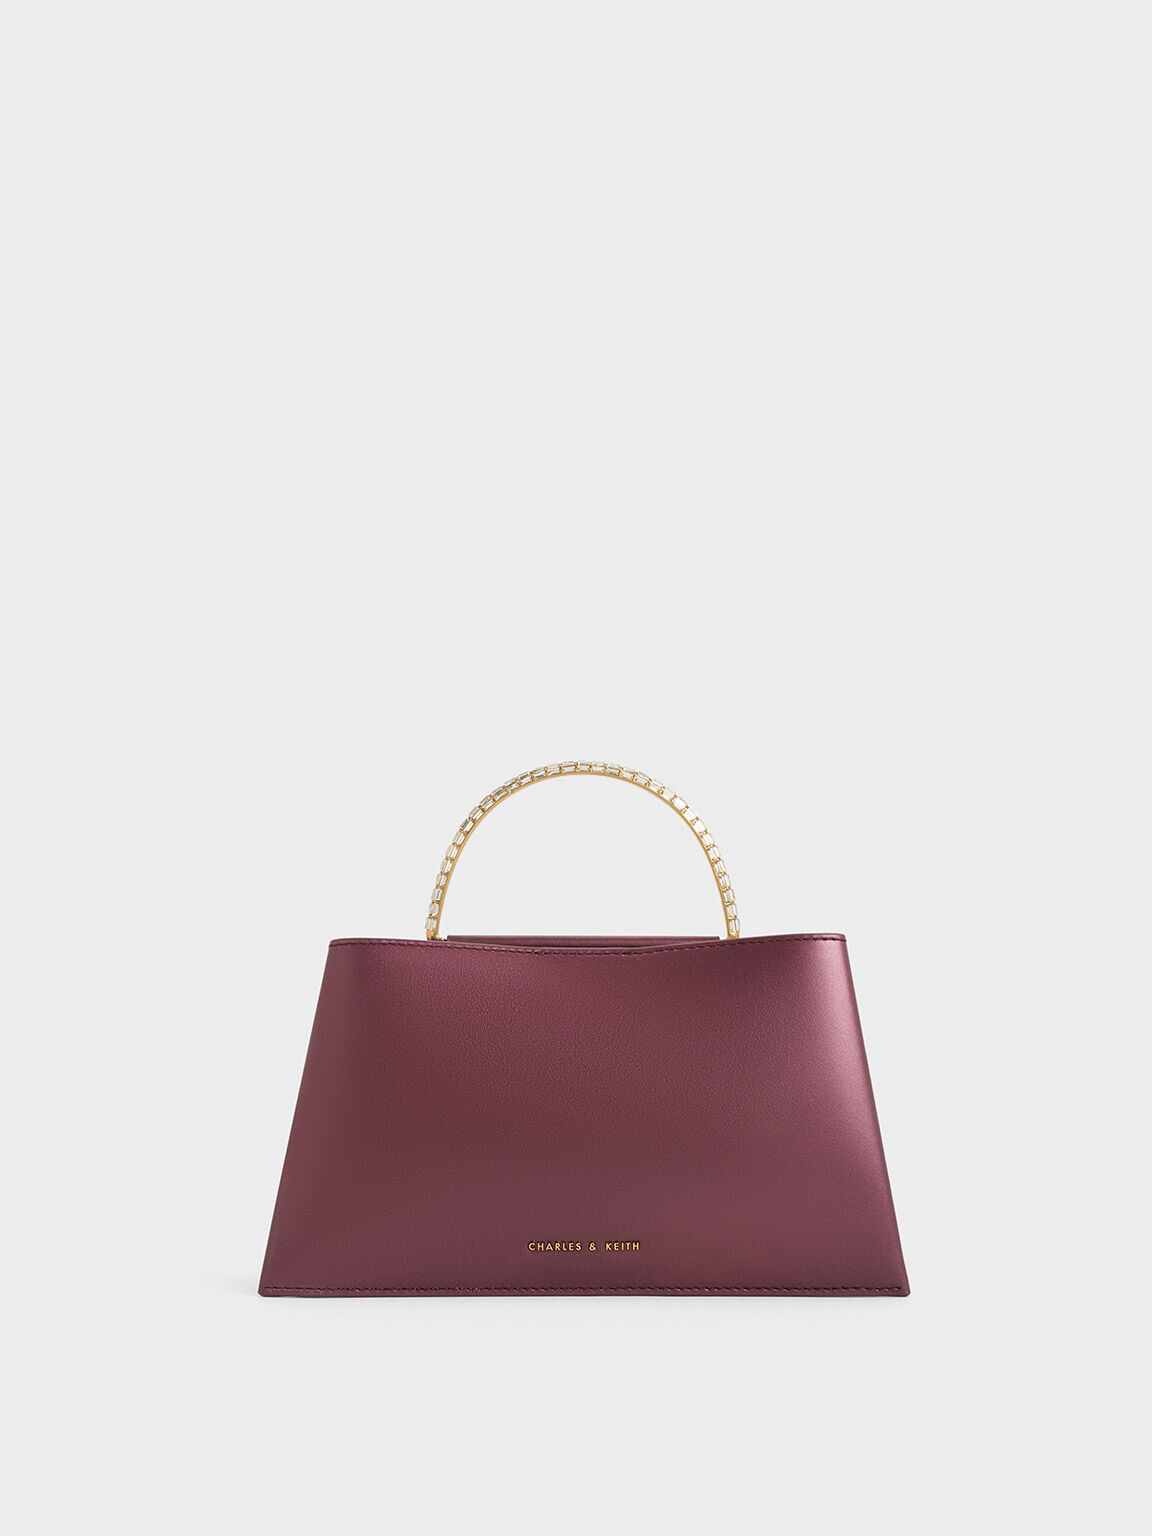 CHARLES & KEITH Handbags, Bags & Purses | John Lewis & Partners